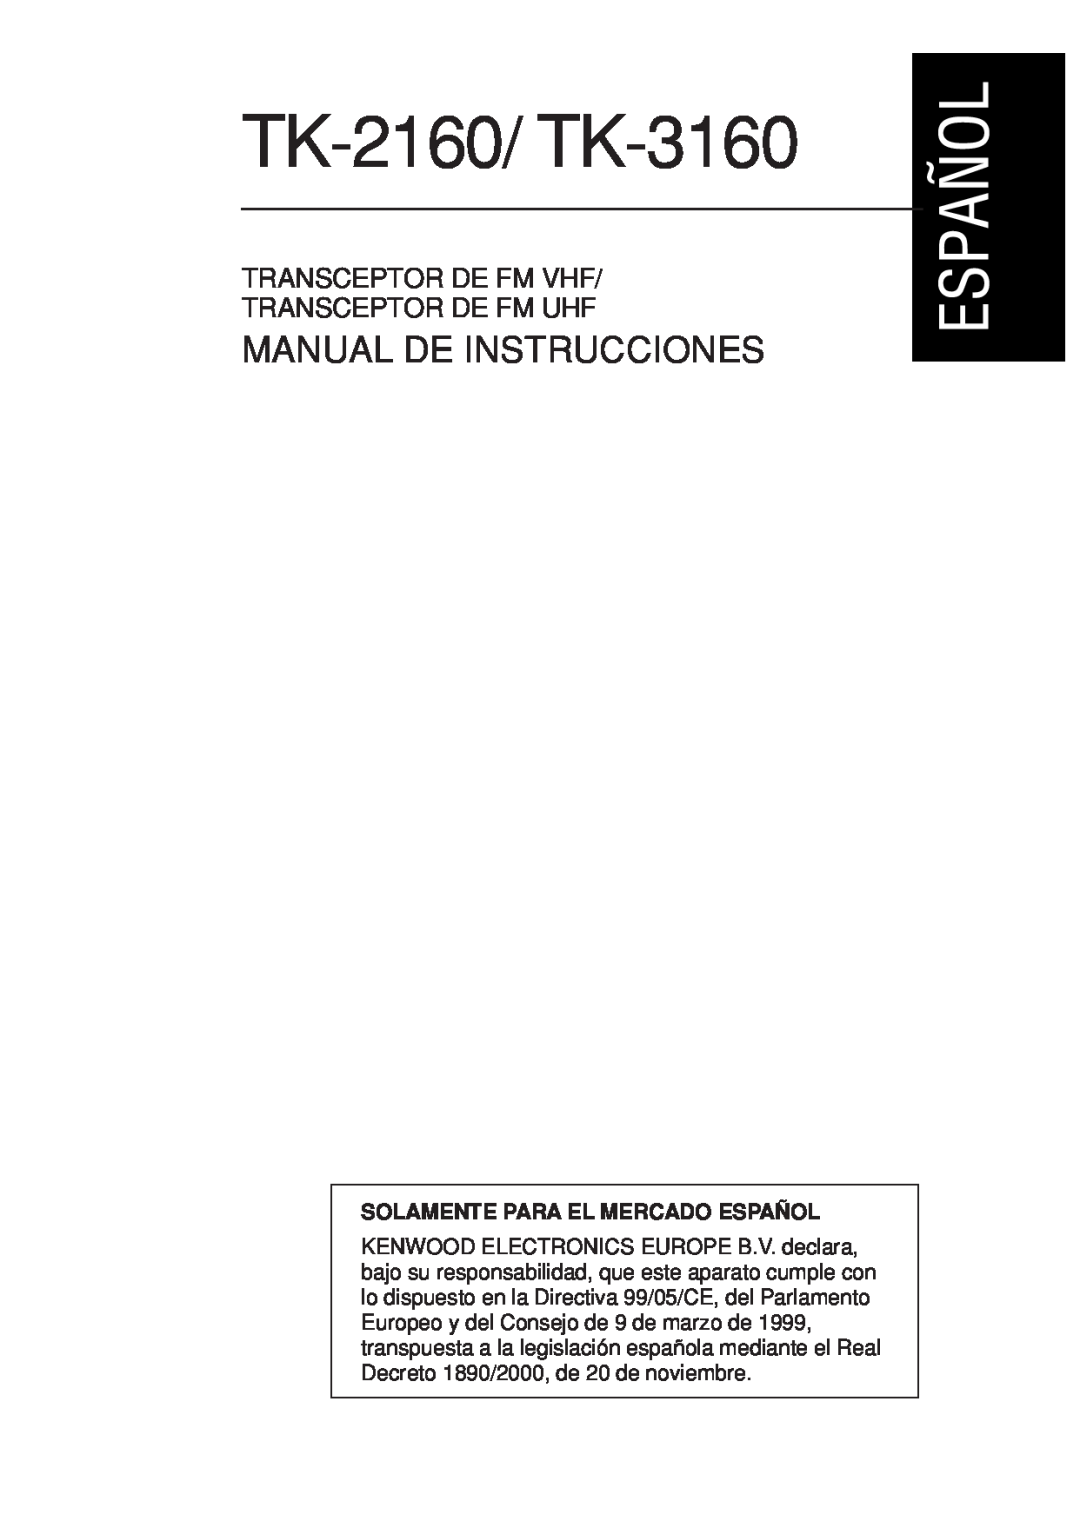 Kenwood instruction manual TK-2160/ TK-3160, Manual De Instrucciones, Transceptor De Fm Vhf Transceptor De Fm Uhf 